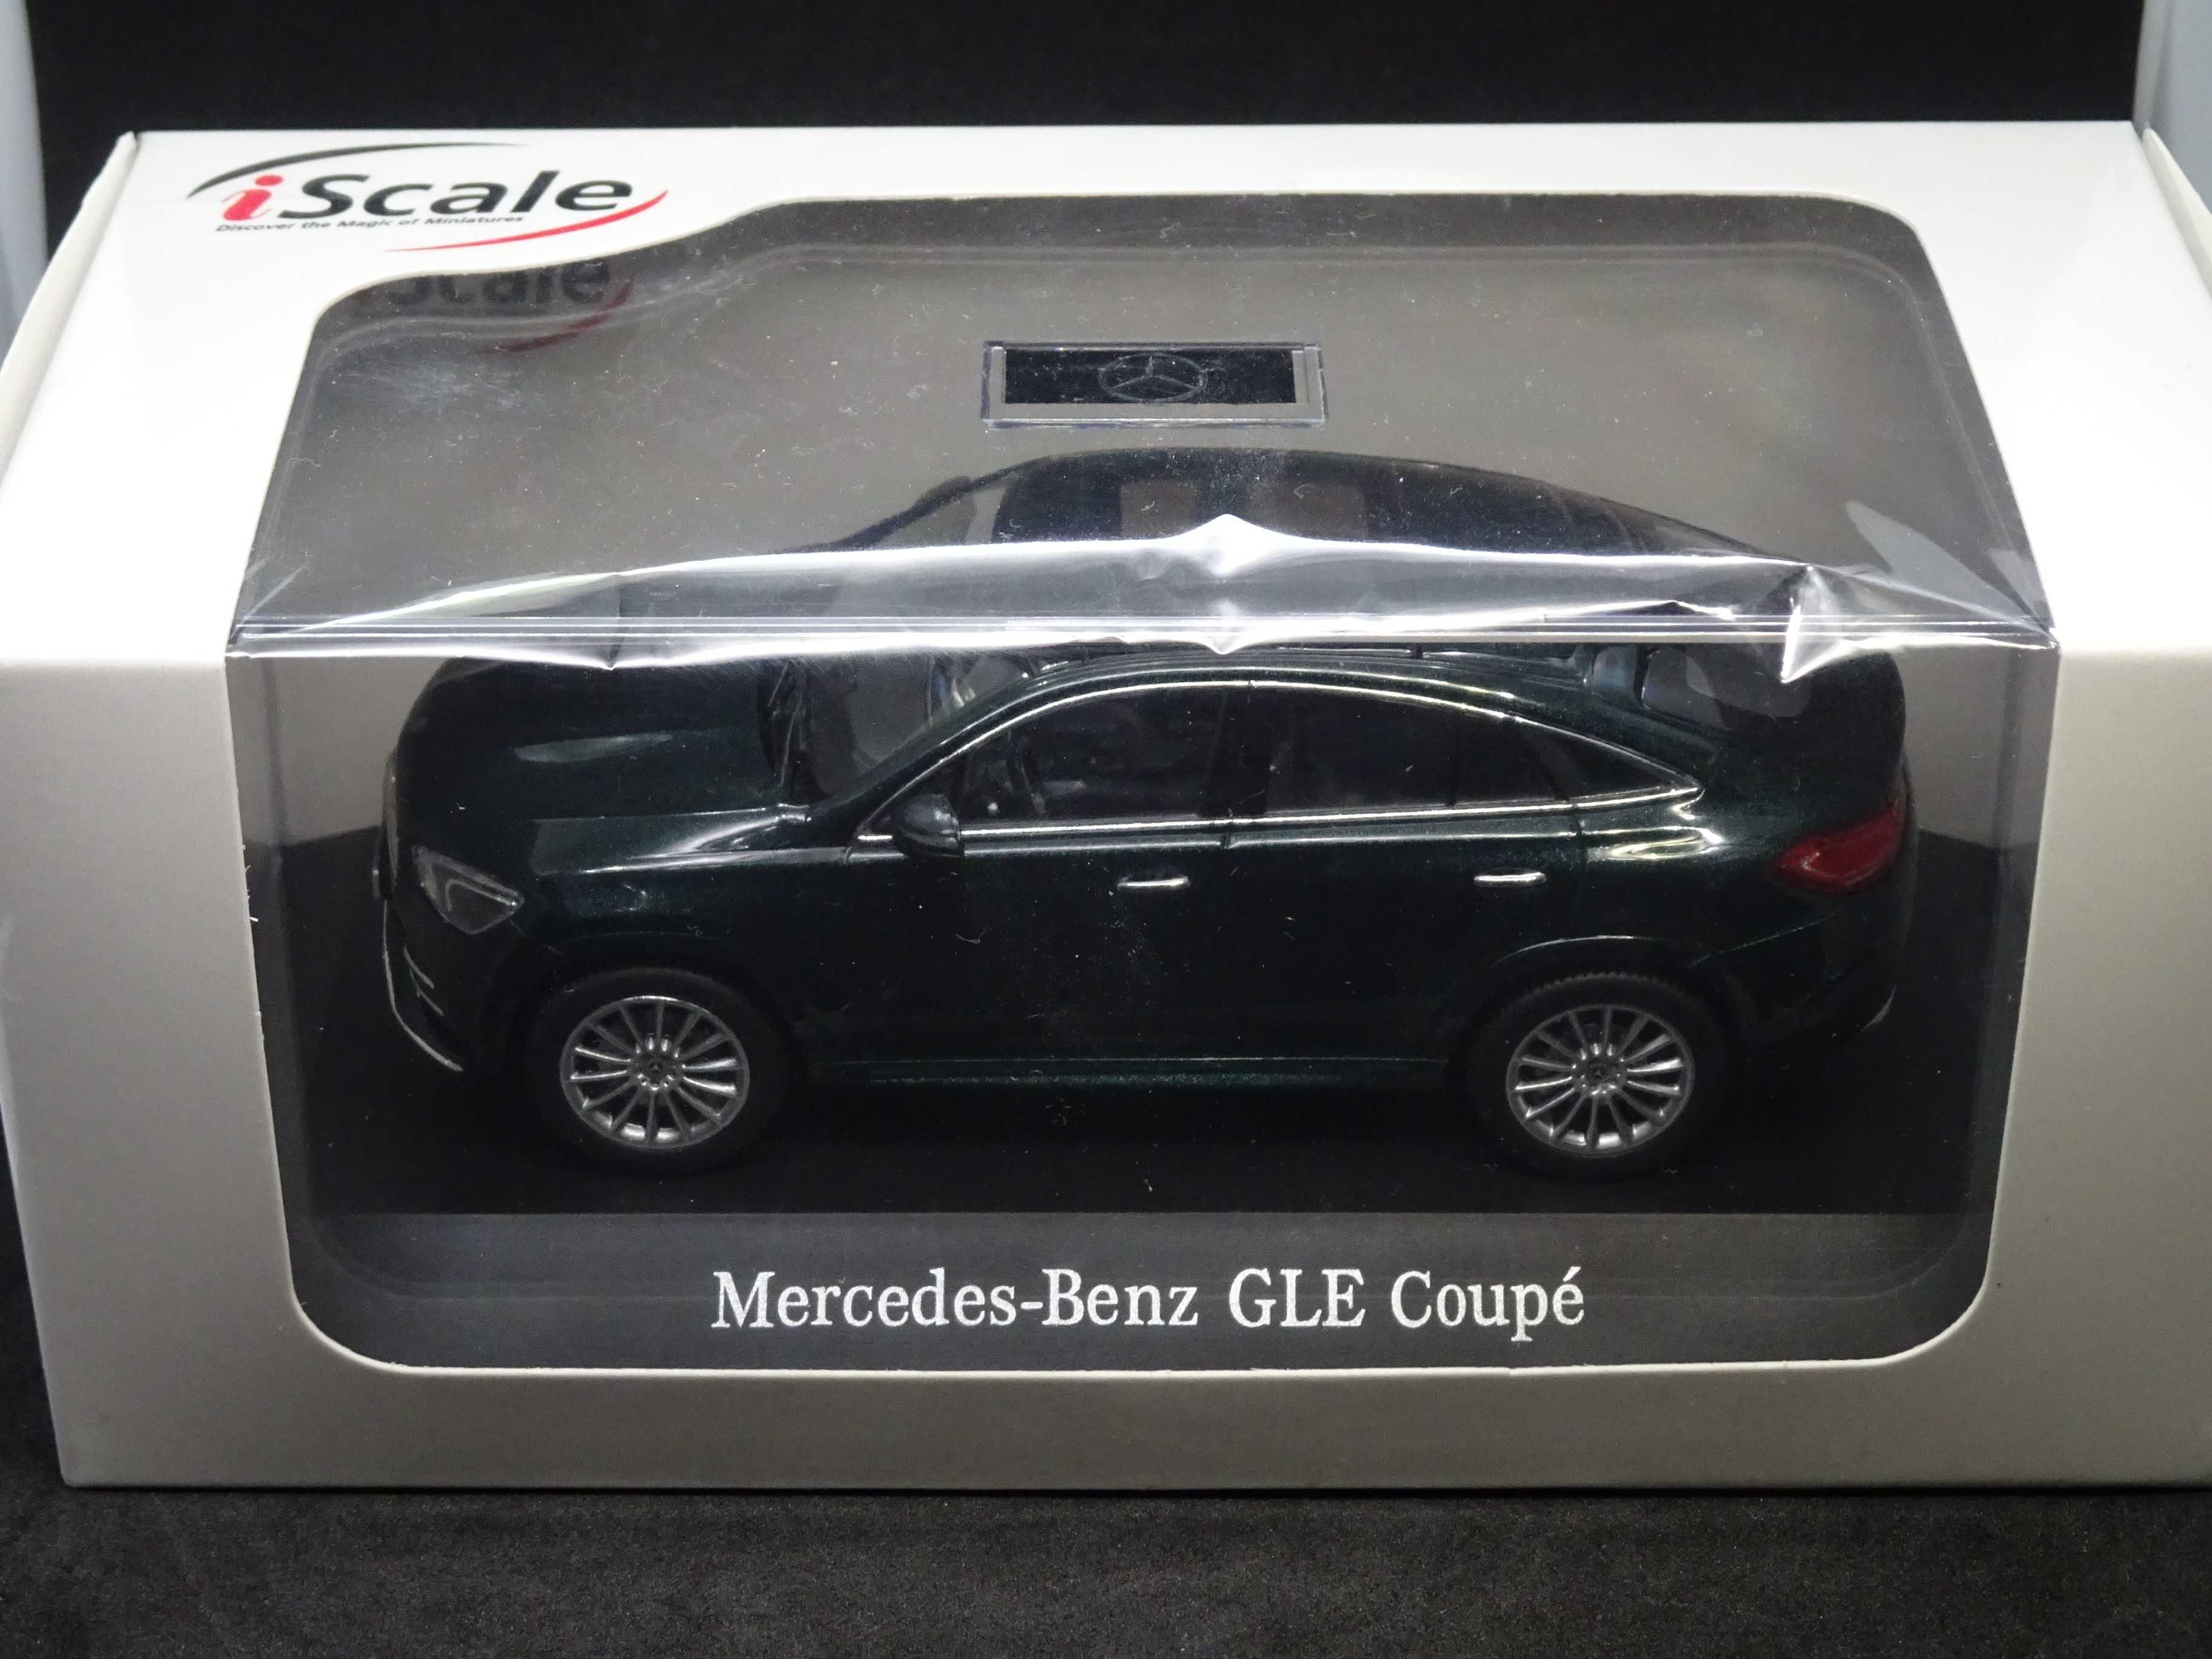 Macheta Mercedes Benz GLE Coupe 1:43 iScale